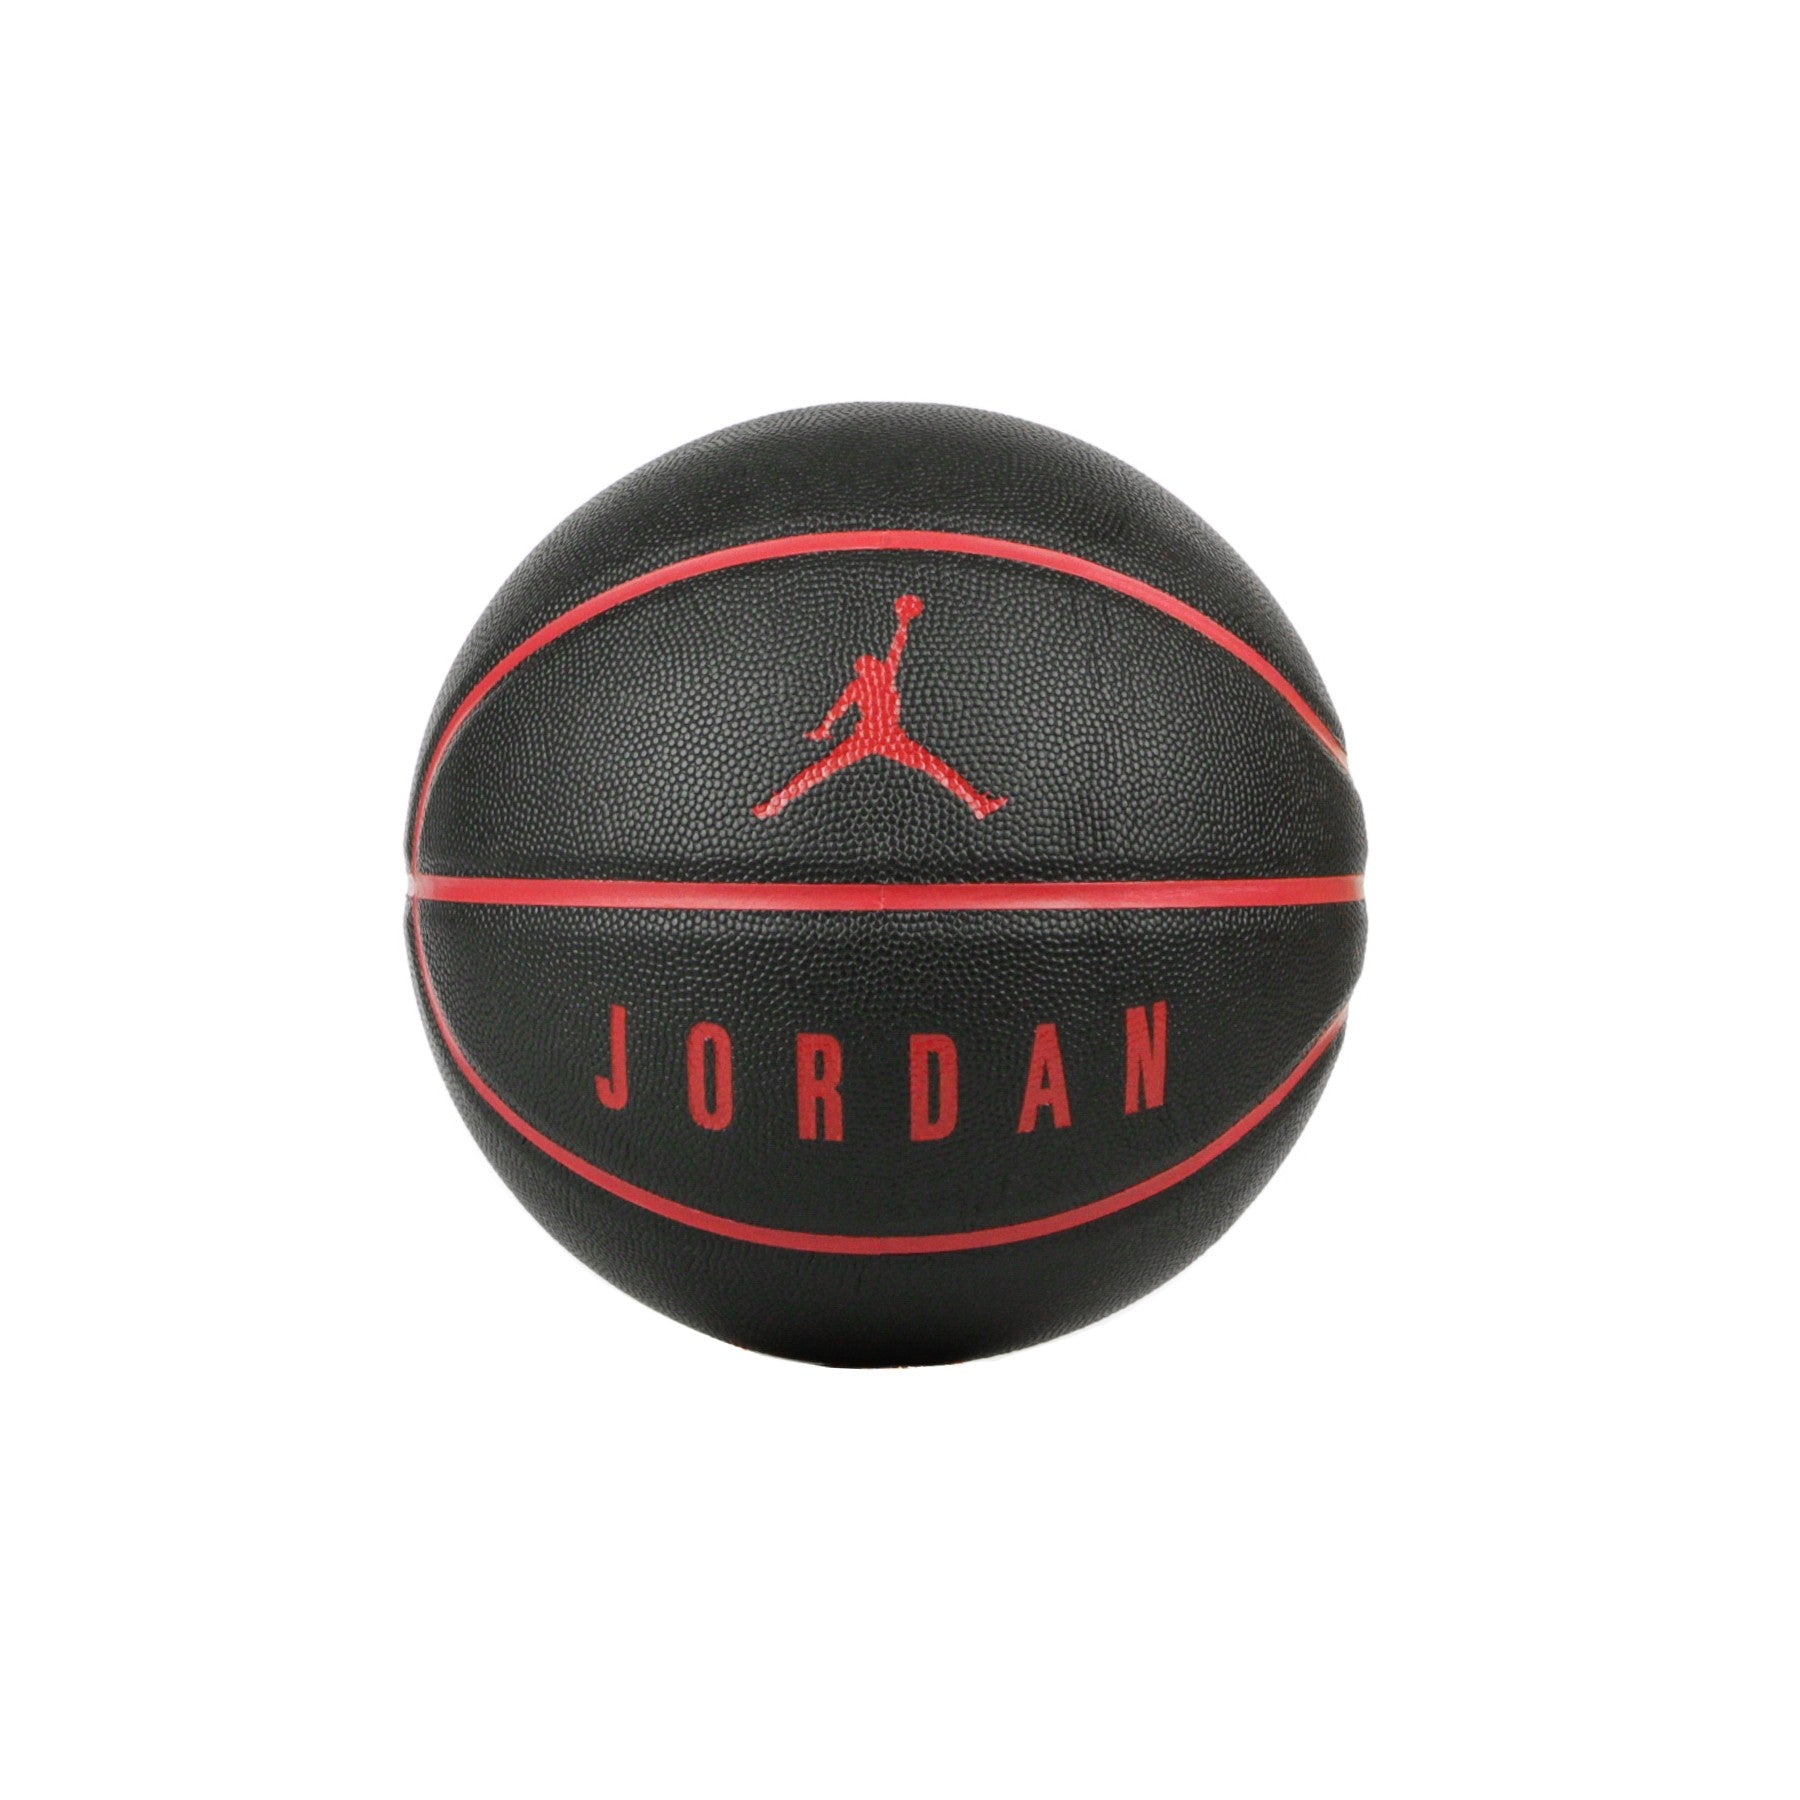 Jordan Nba, Pallone Uomo Ultimate Size 7, Black/red